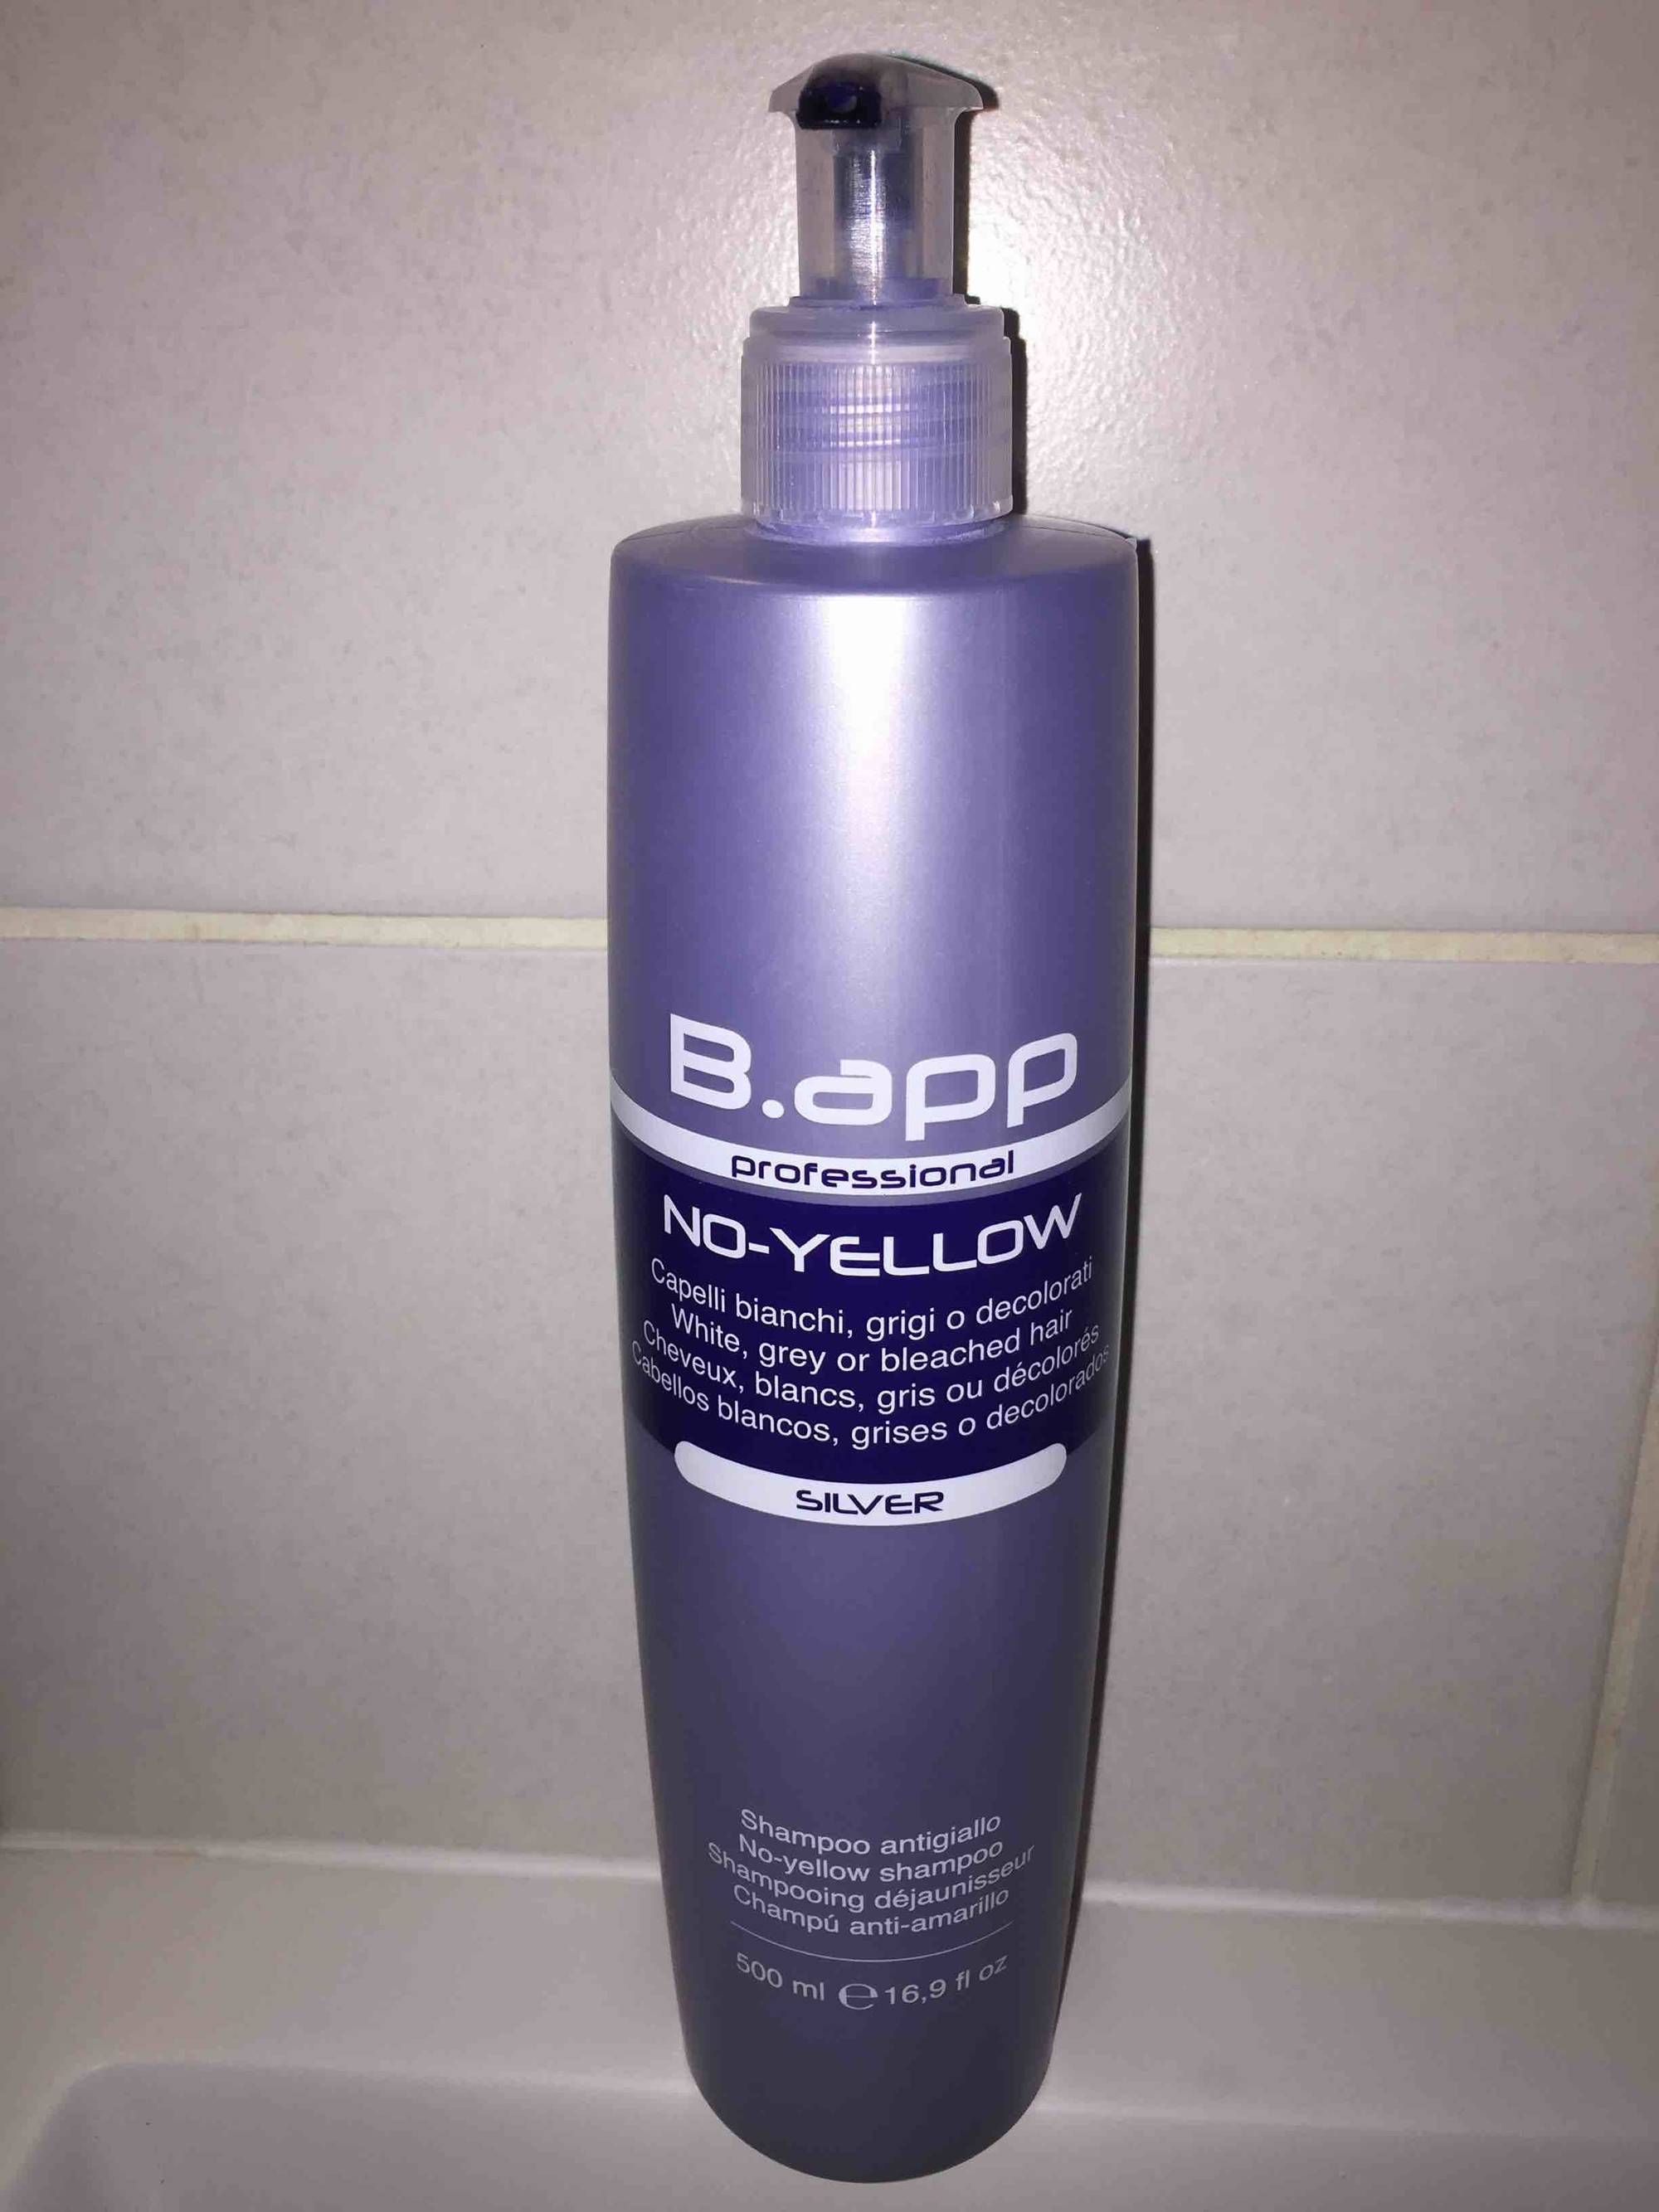 B.APP - No-yellow - Silver - Shampooing déjaunisseur